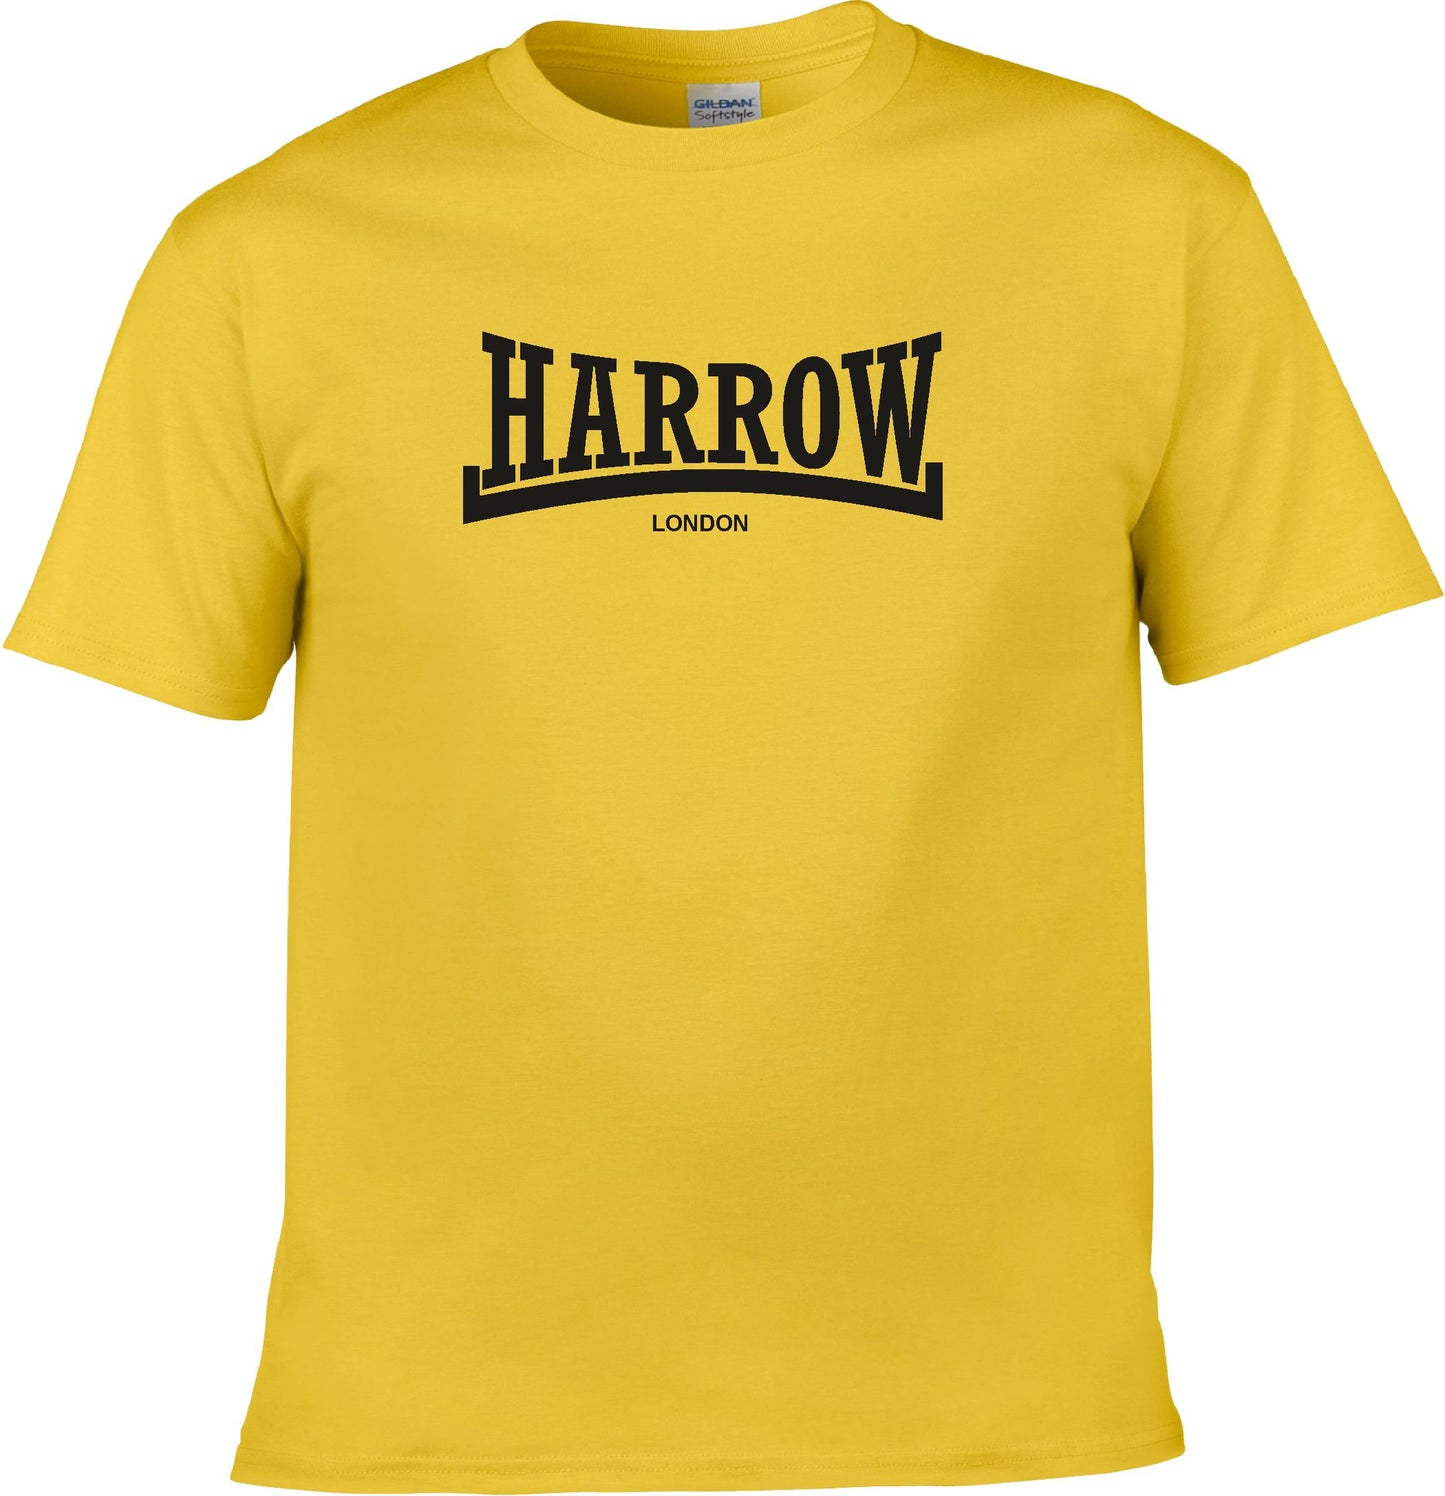 Harrow T-Shirt - London Souvenir, Custom Print Available, S-XXL